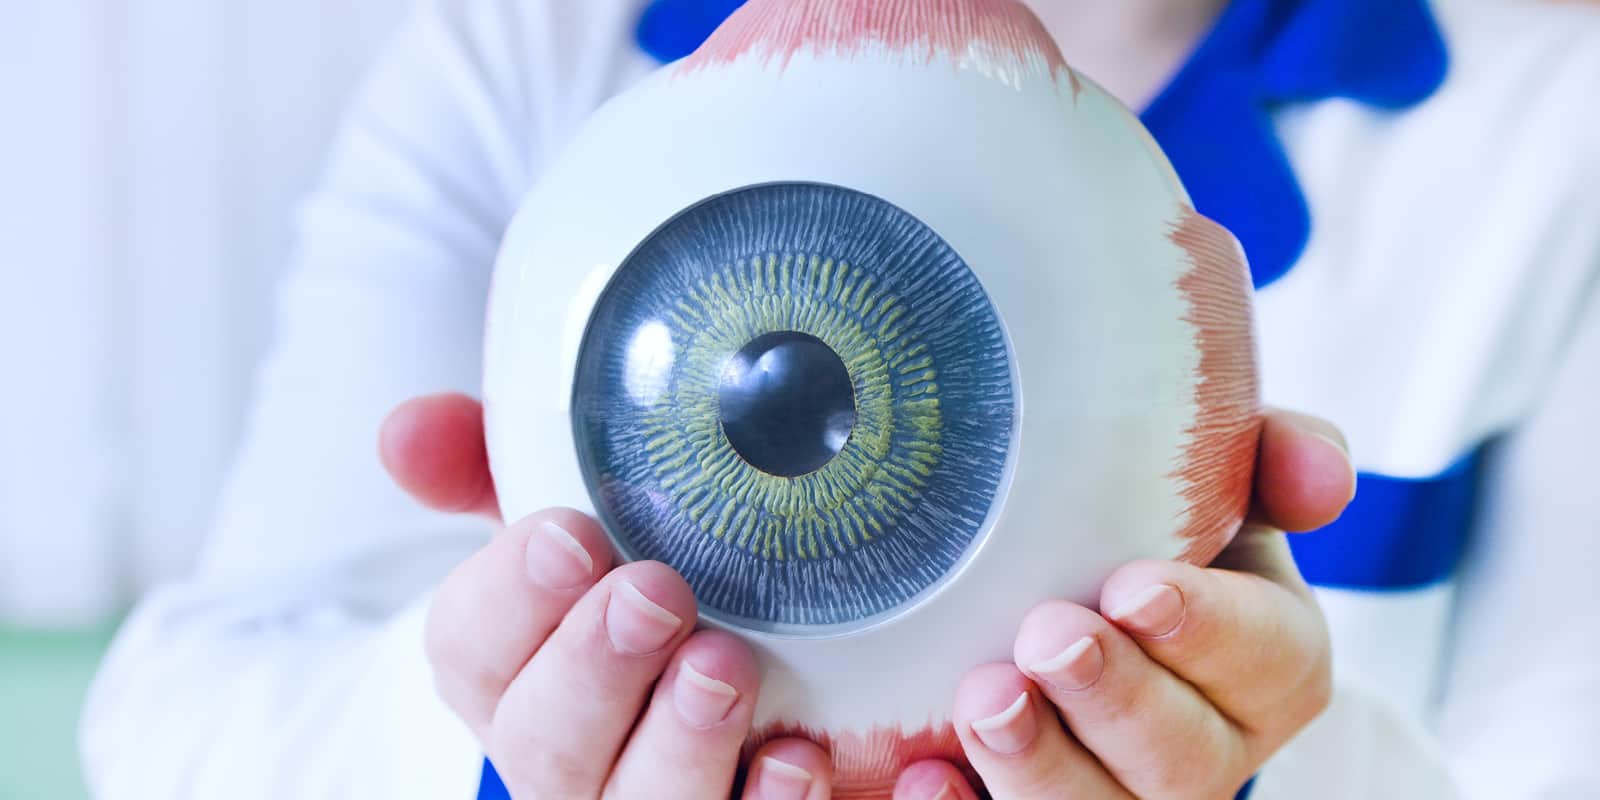 Glaucoma: Take The Pressure Test